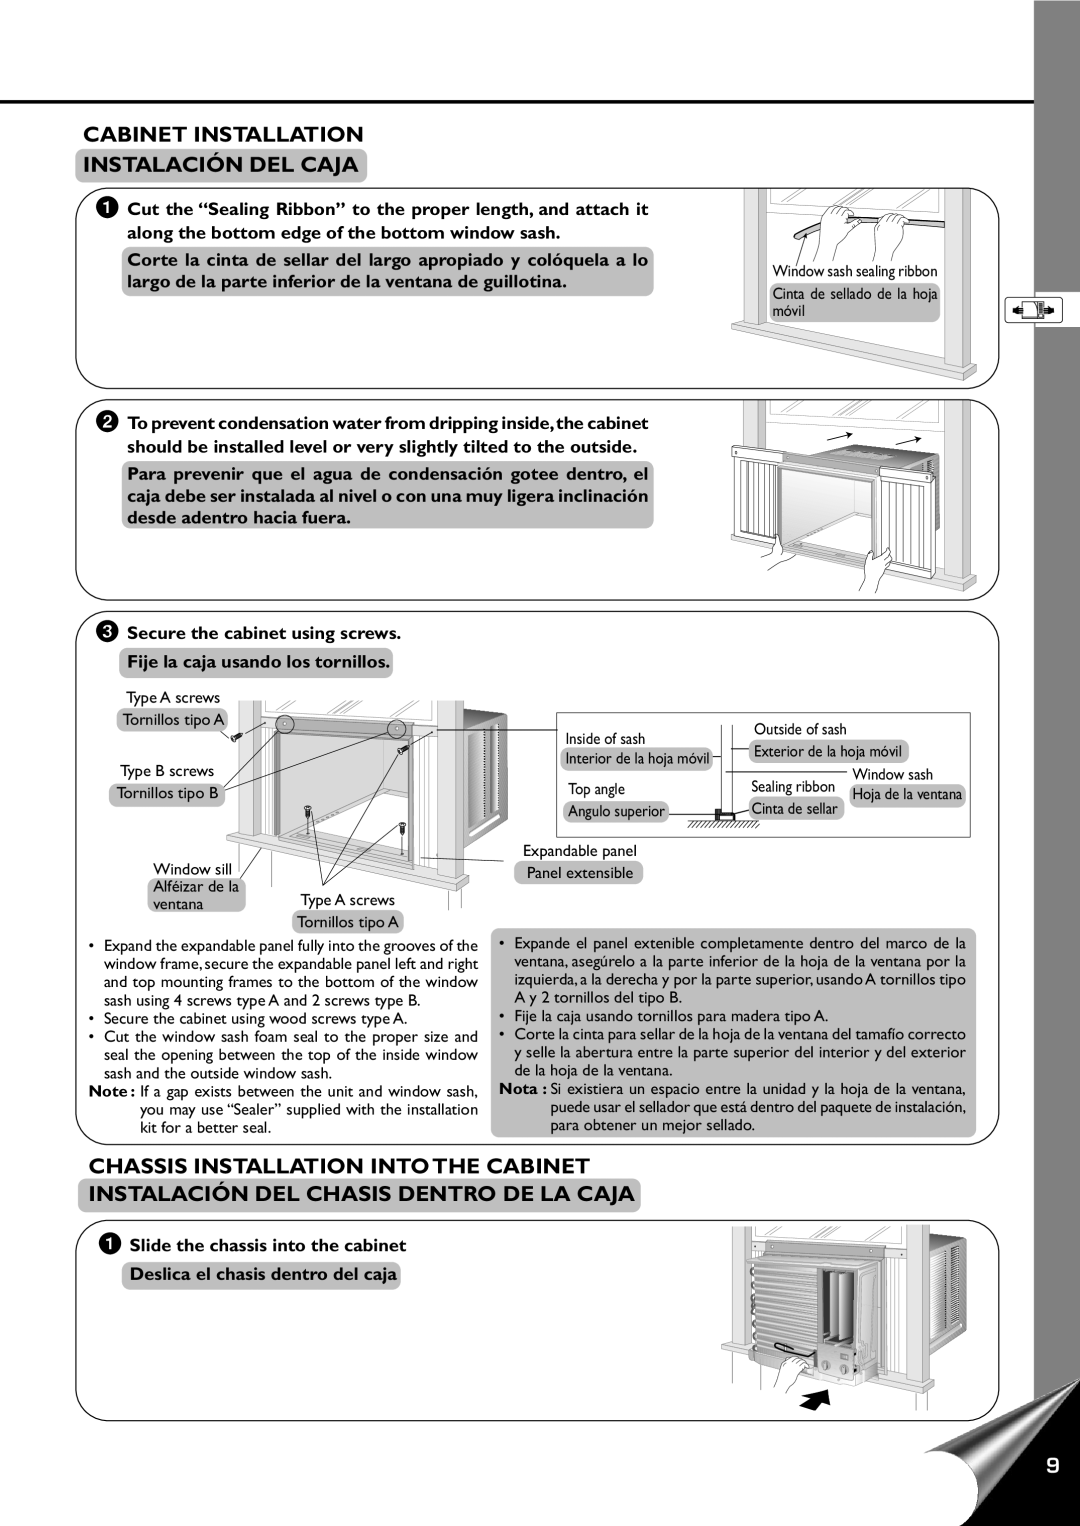 Panasonic CW-C100AU, CW-C120AU manual Cabinet Installation Instalación Del Caja, Chassis Installation Into The Cabinet 